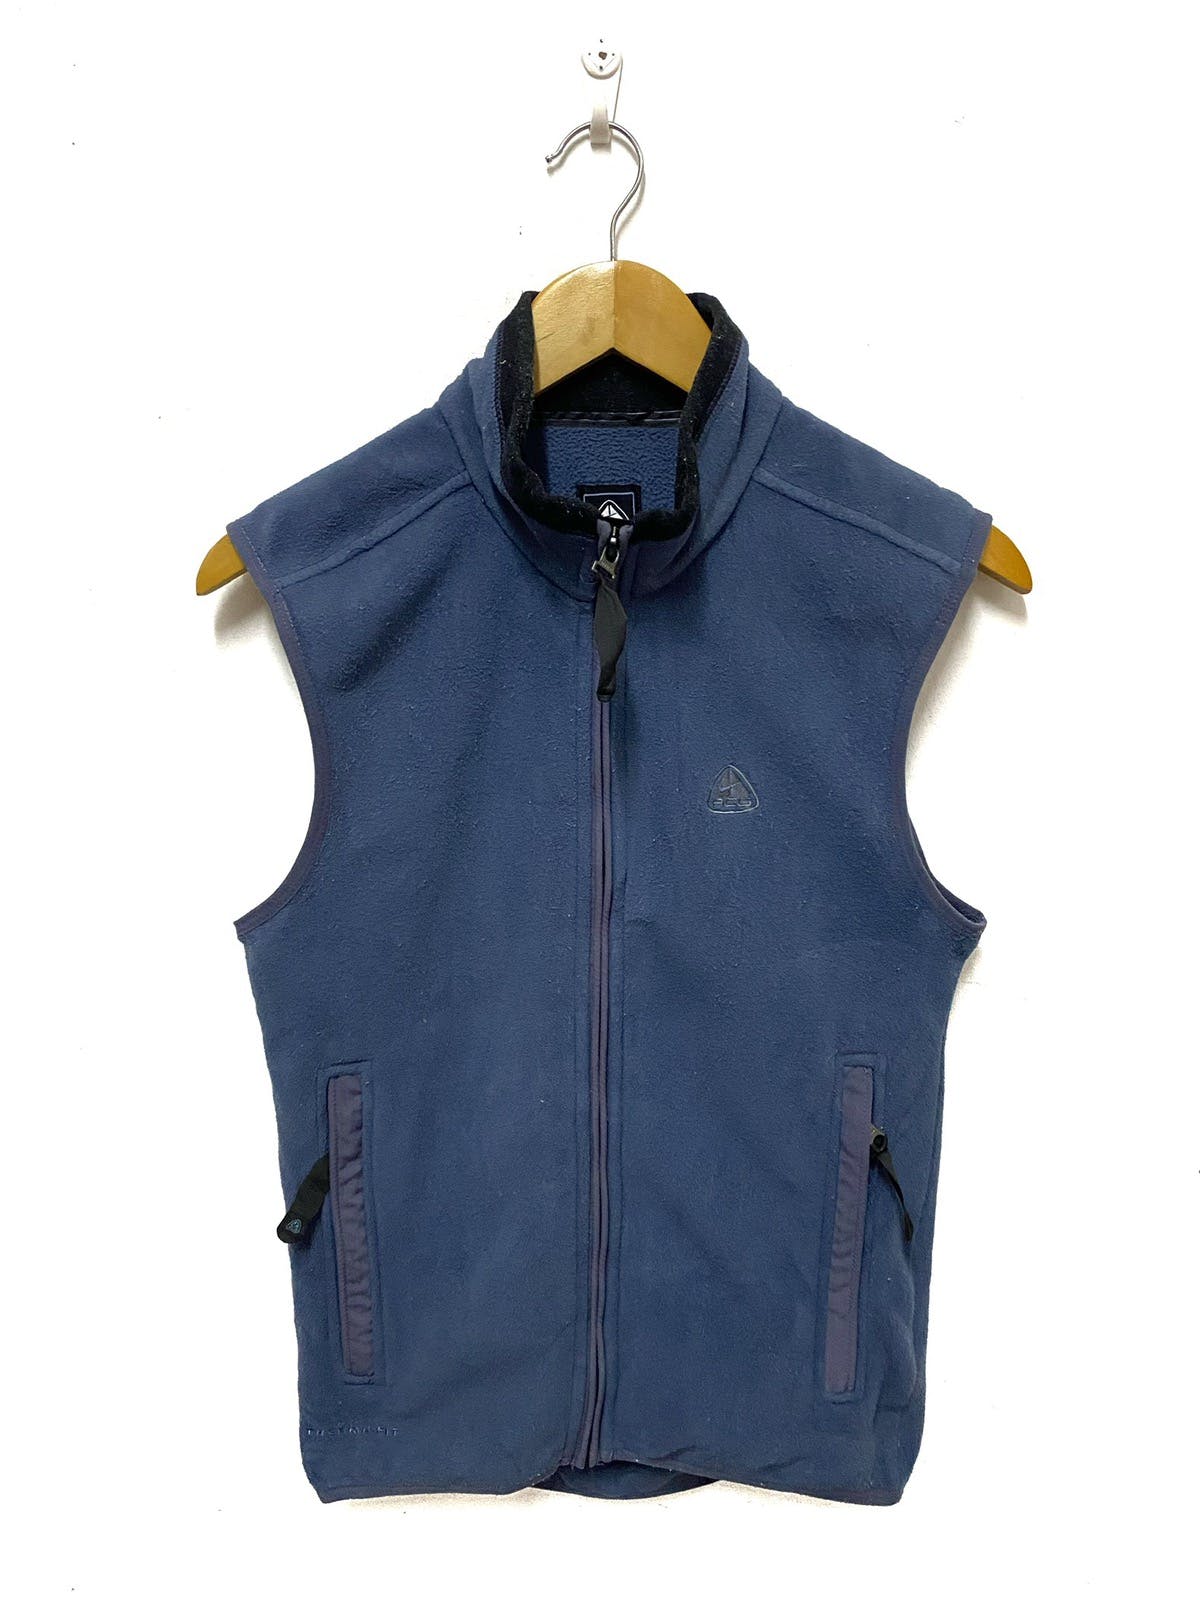 Vintage Nike ACG Therma Fit Vest Jacket - 1